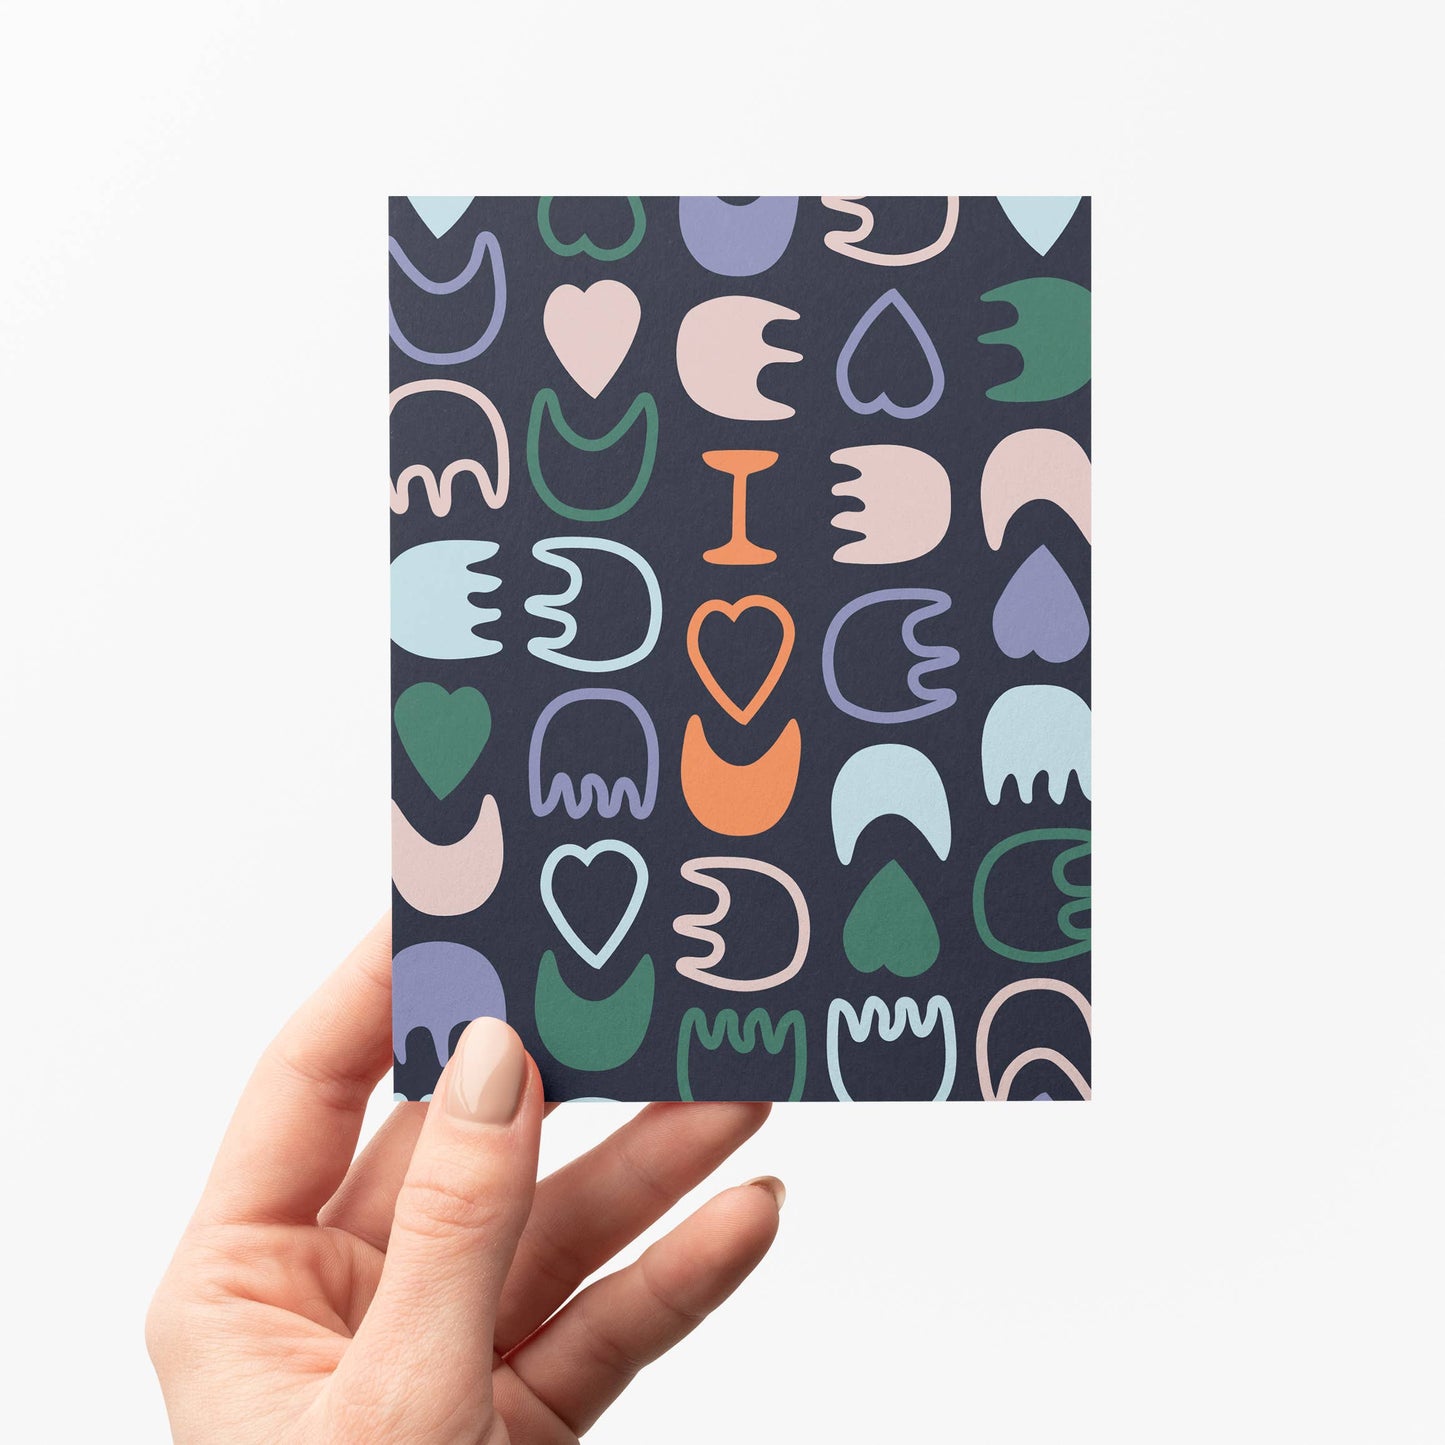 MASU - I Heart U Matisse Inspired Abstract Art Love Greeting Card MASU